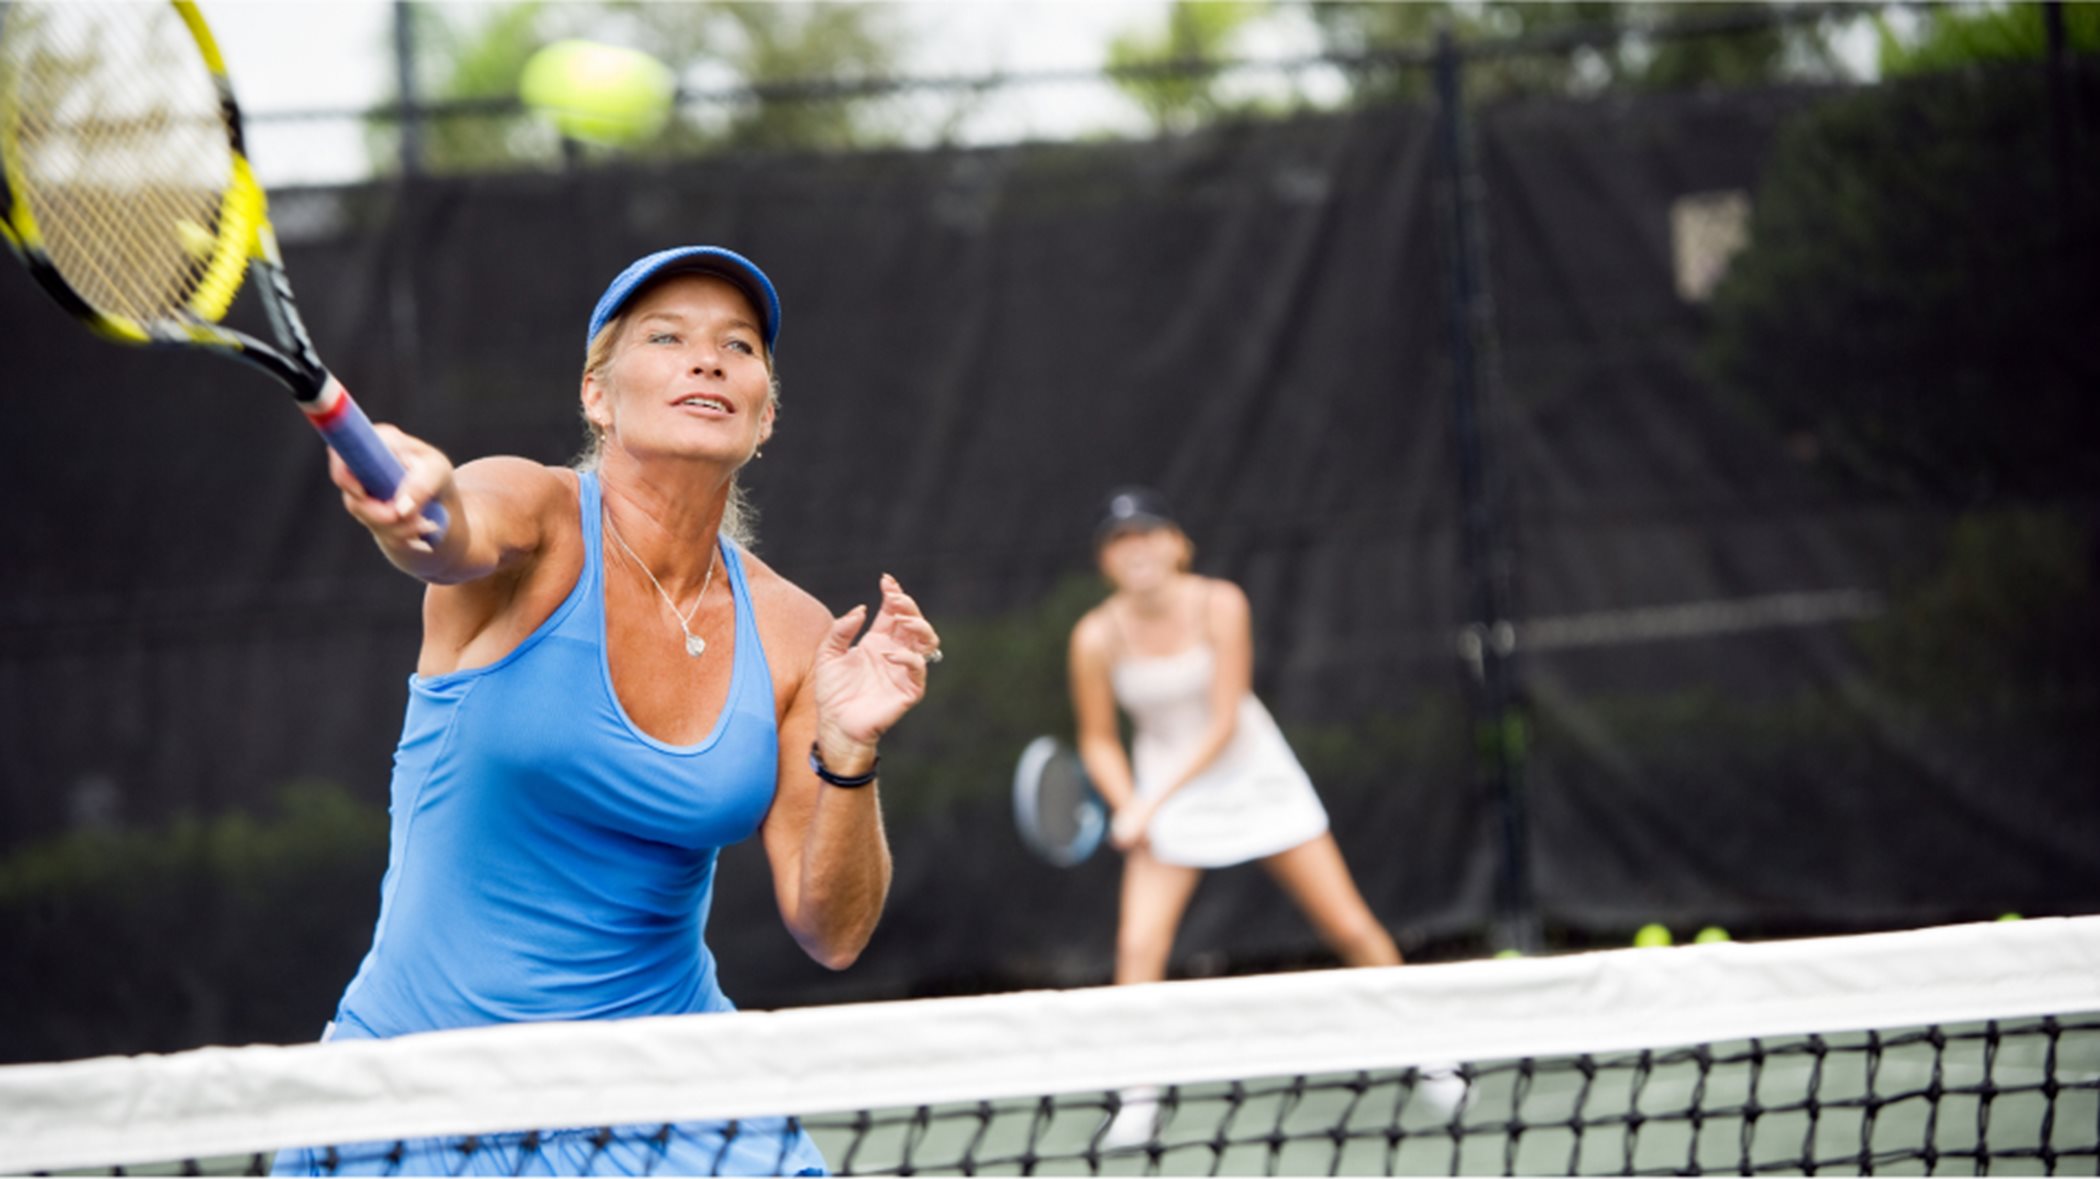 Woman hitting a tennis ball